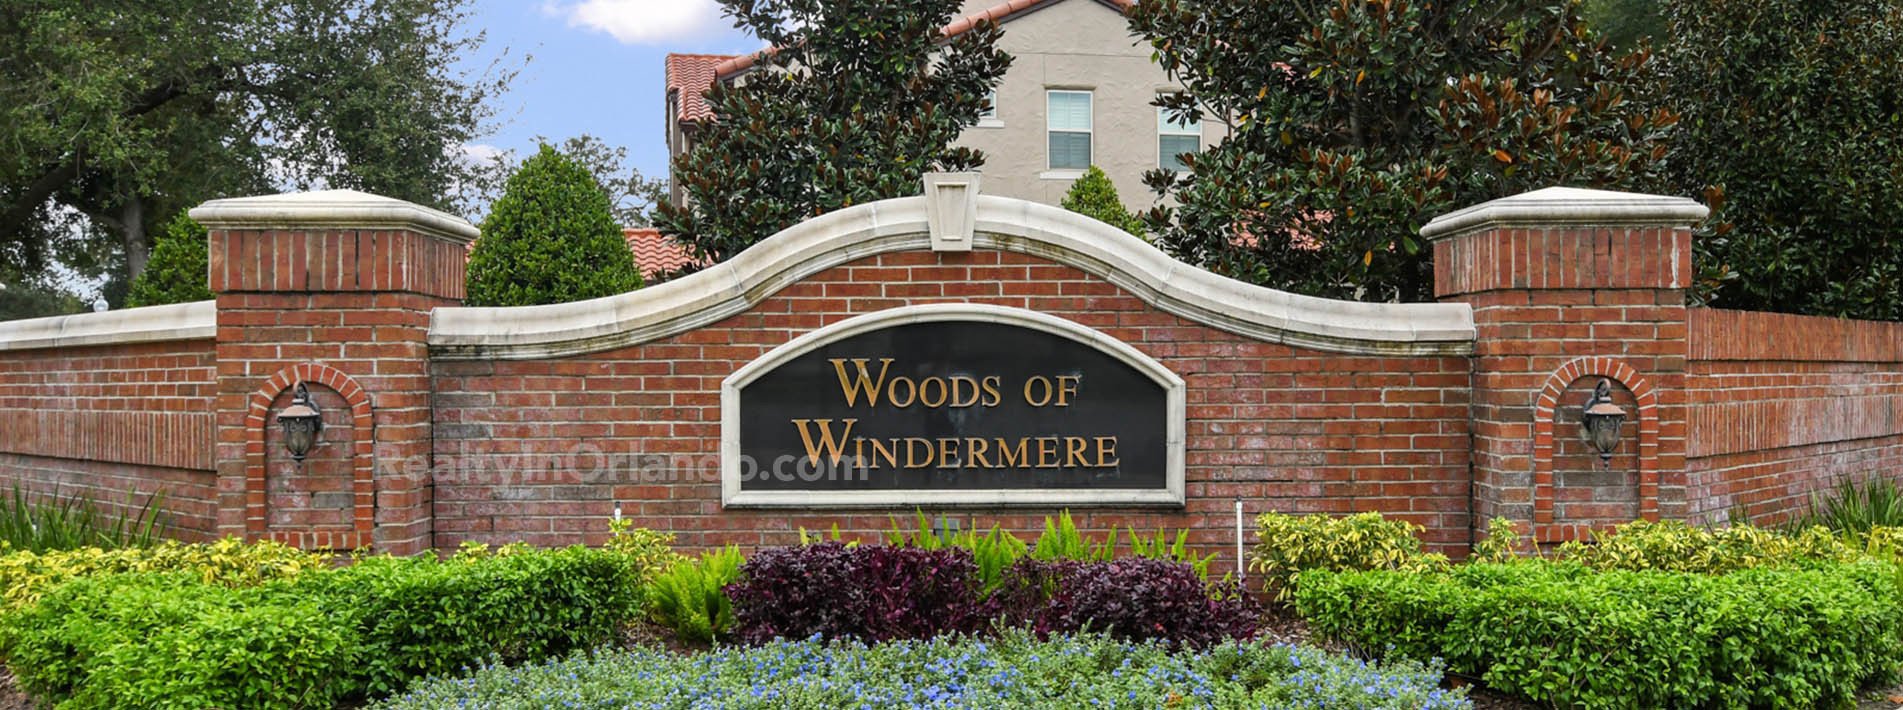 Woods of Windermere